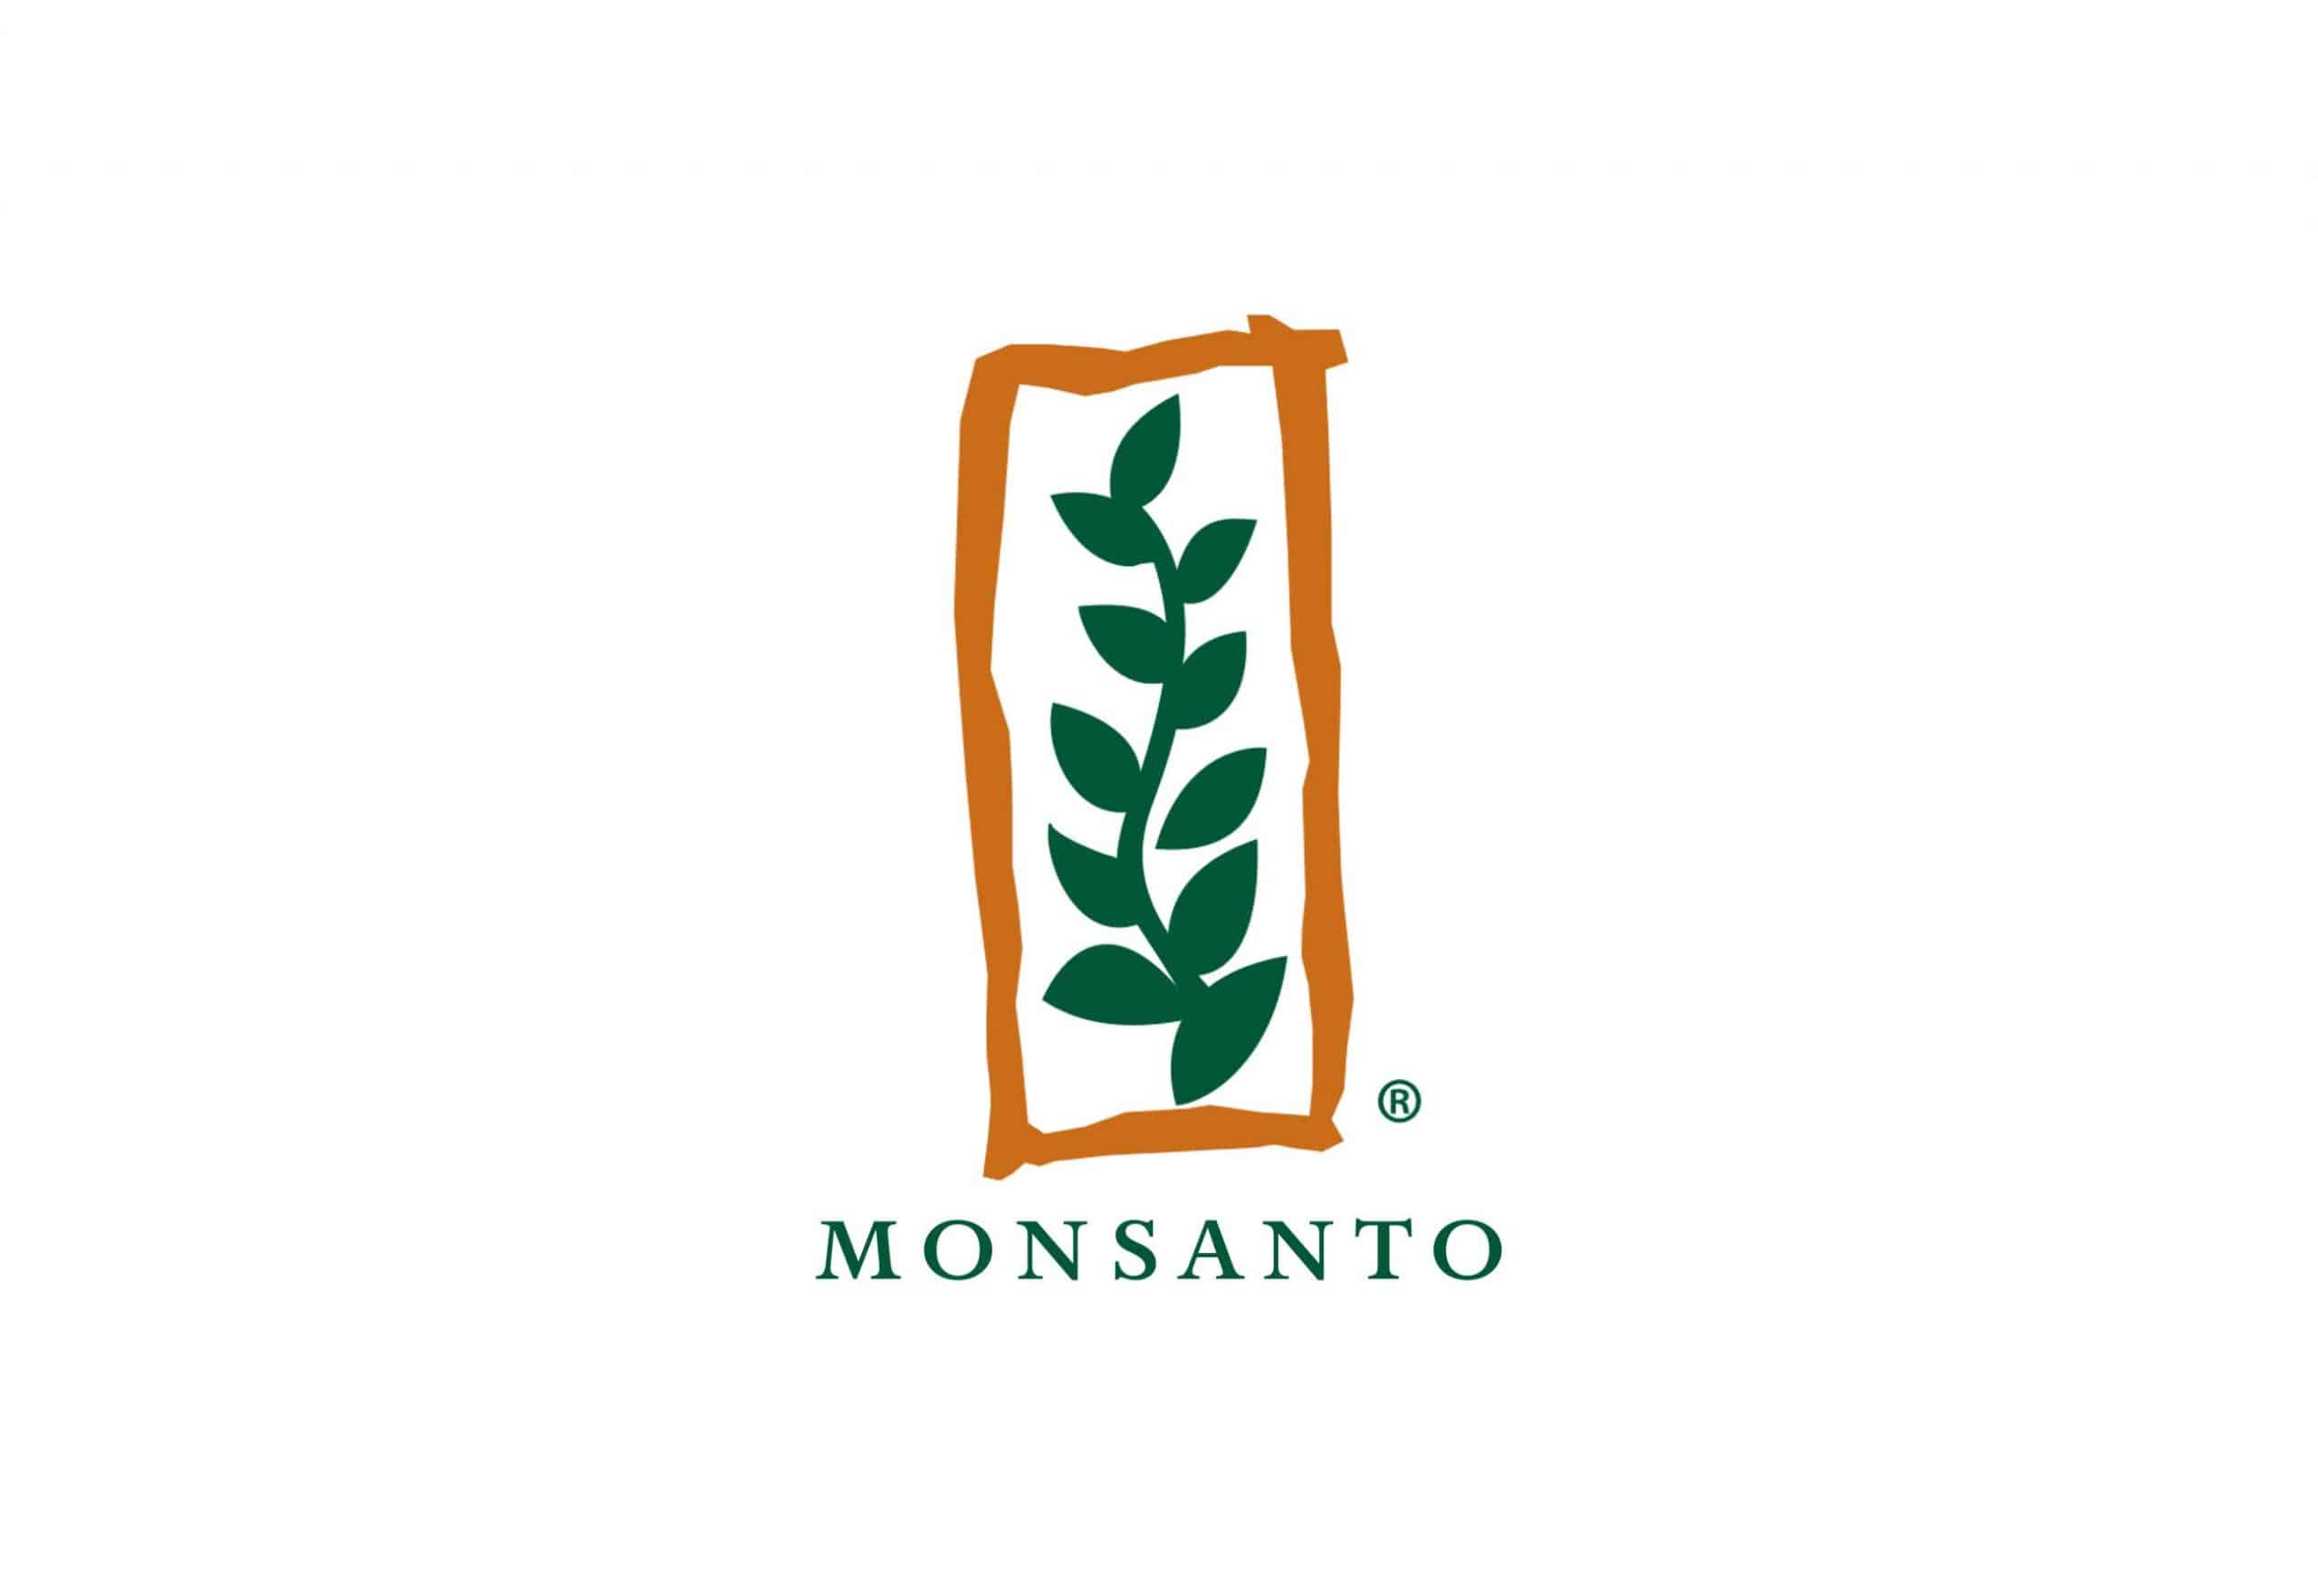 Le logo de Monsanto